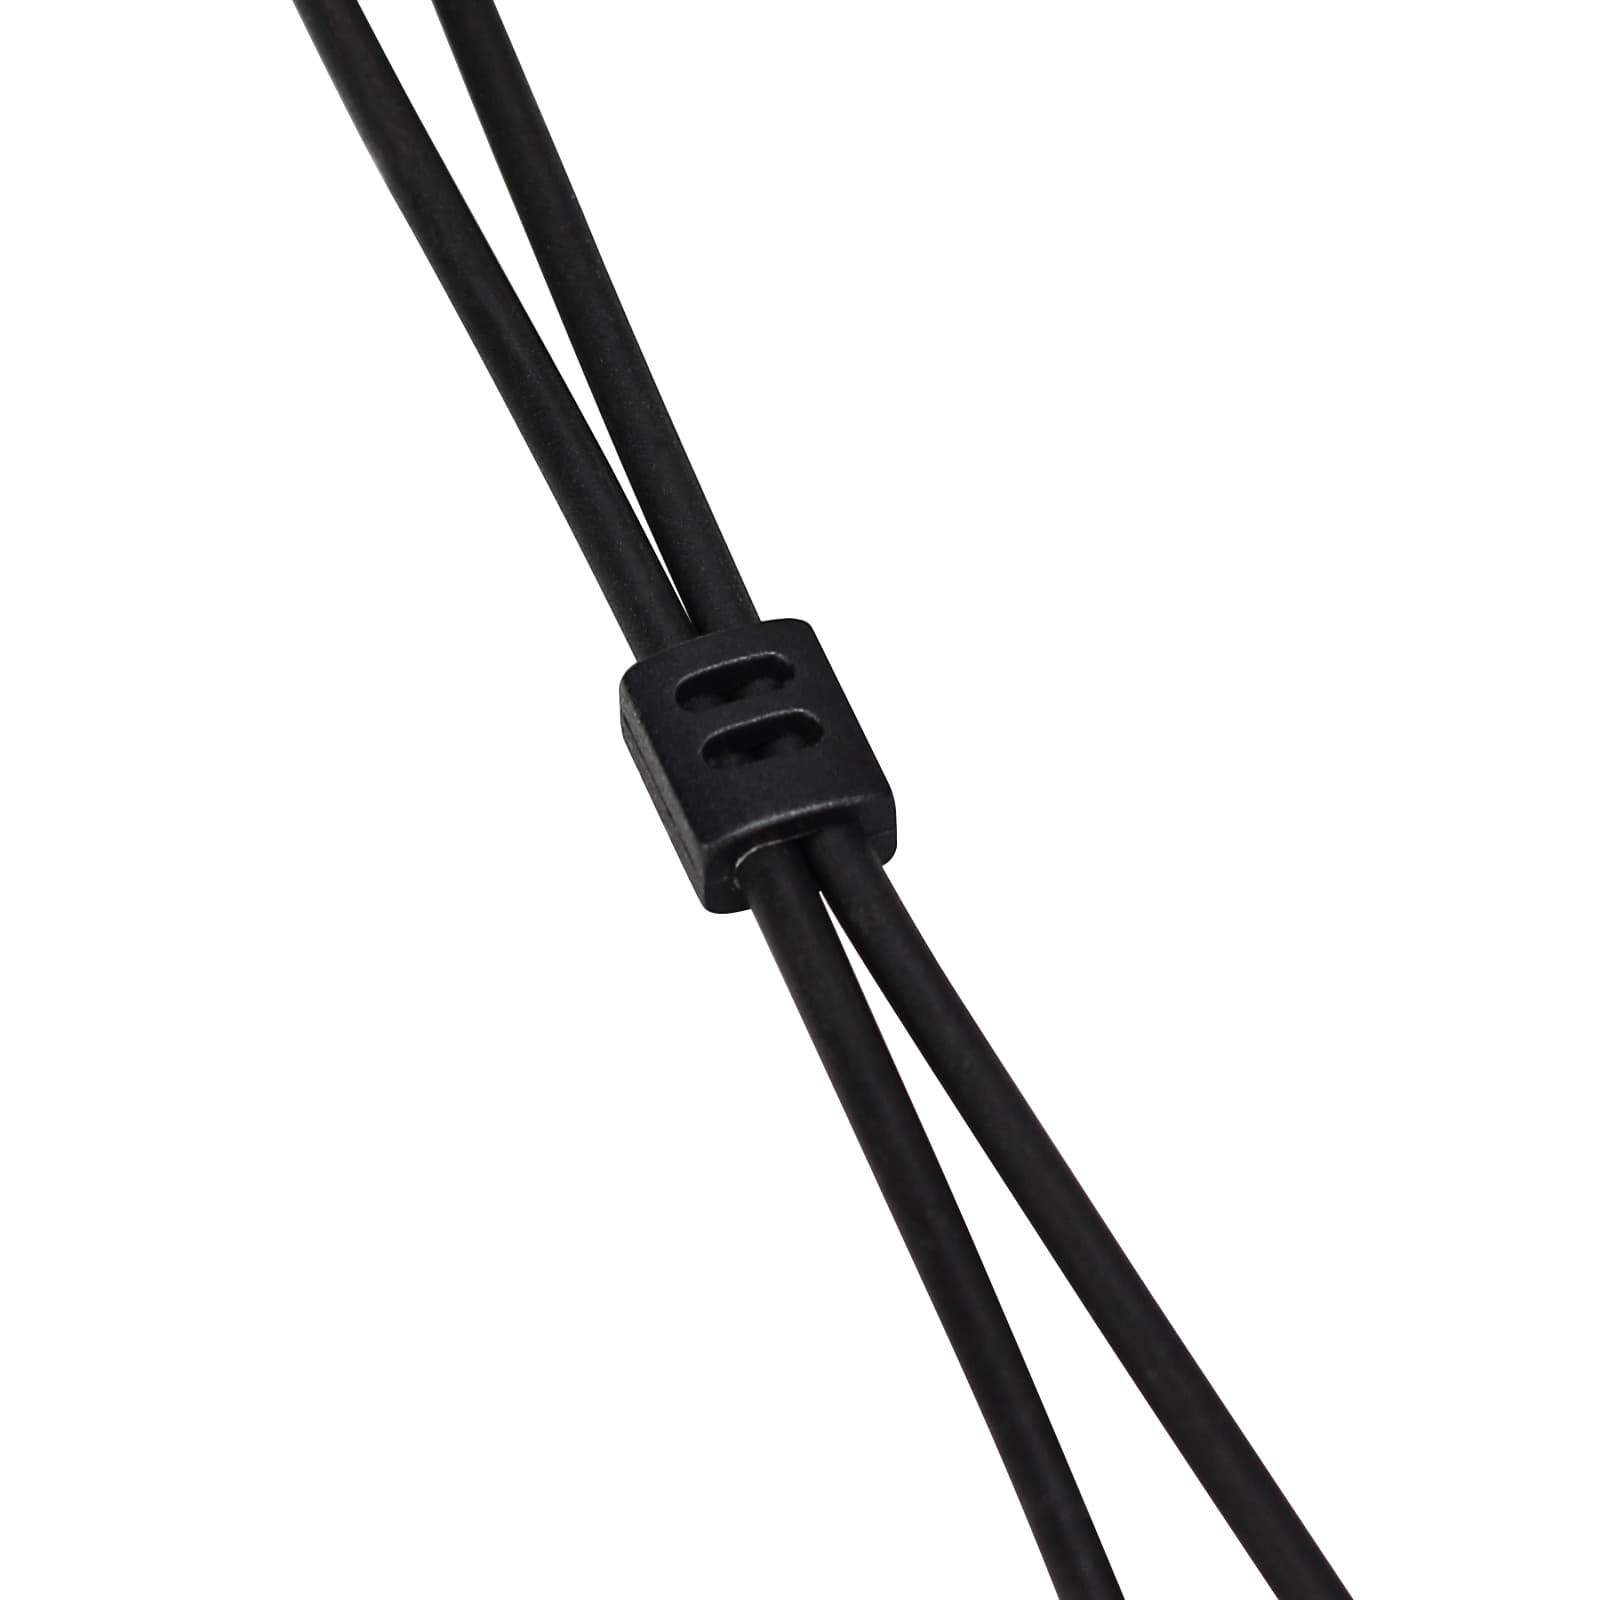 Retevis EEK014 Cable Clip